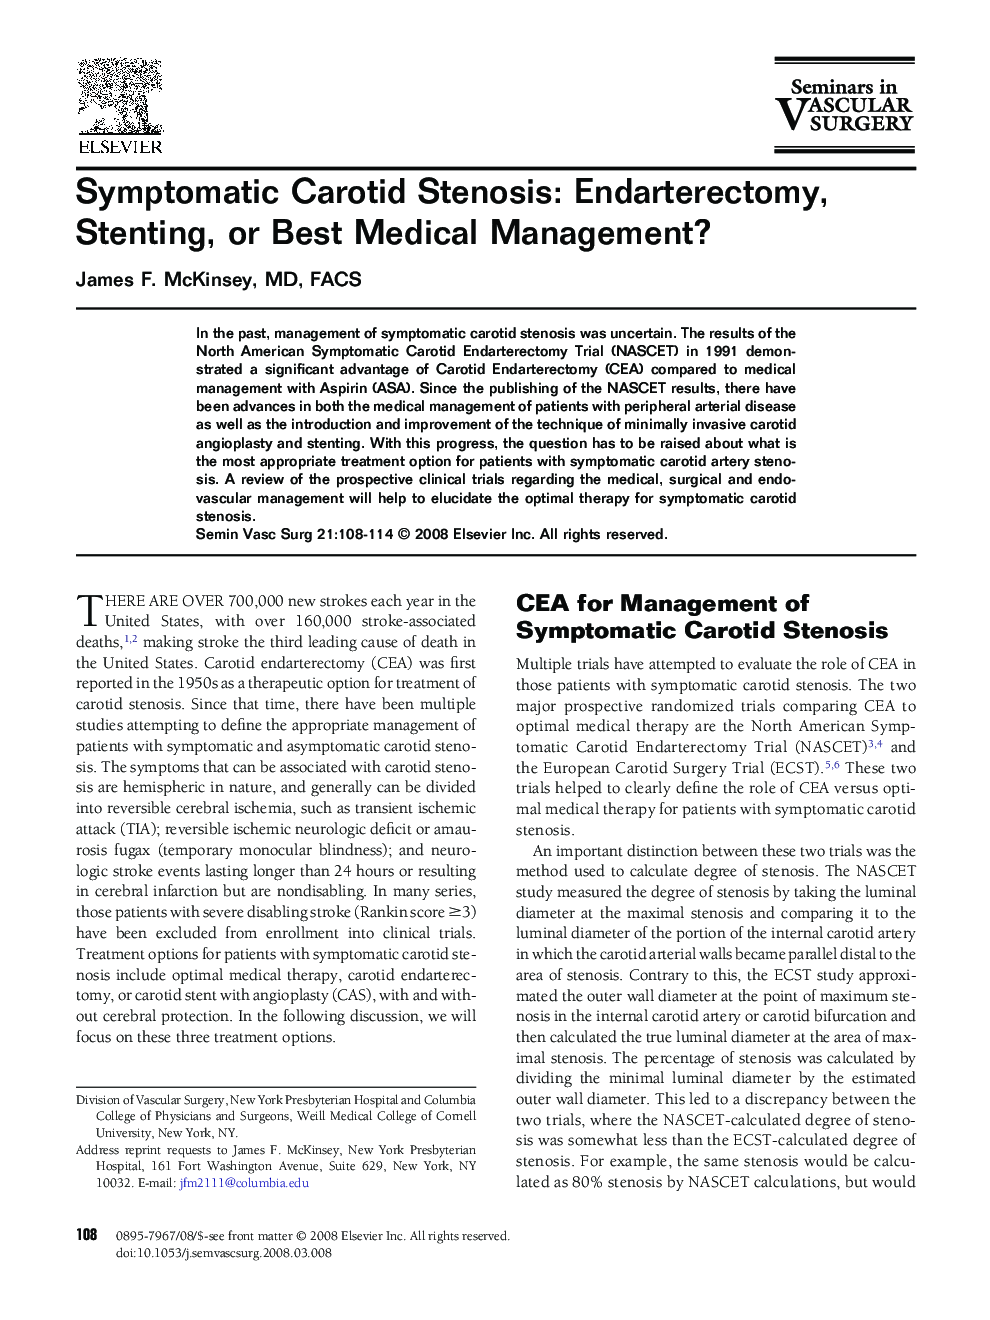 Symptomatic Carotid Stenosis: Endarterectomy, Stenting, or Best Medical Management?